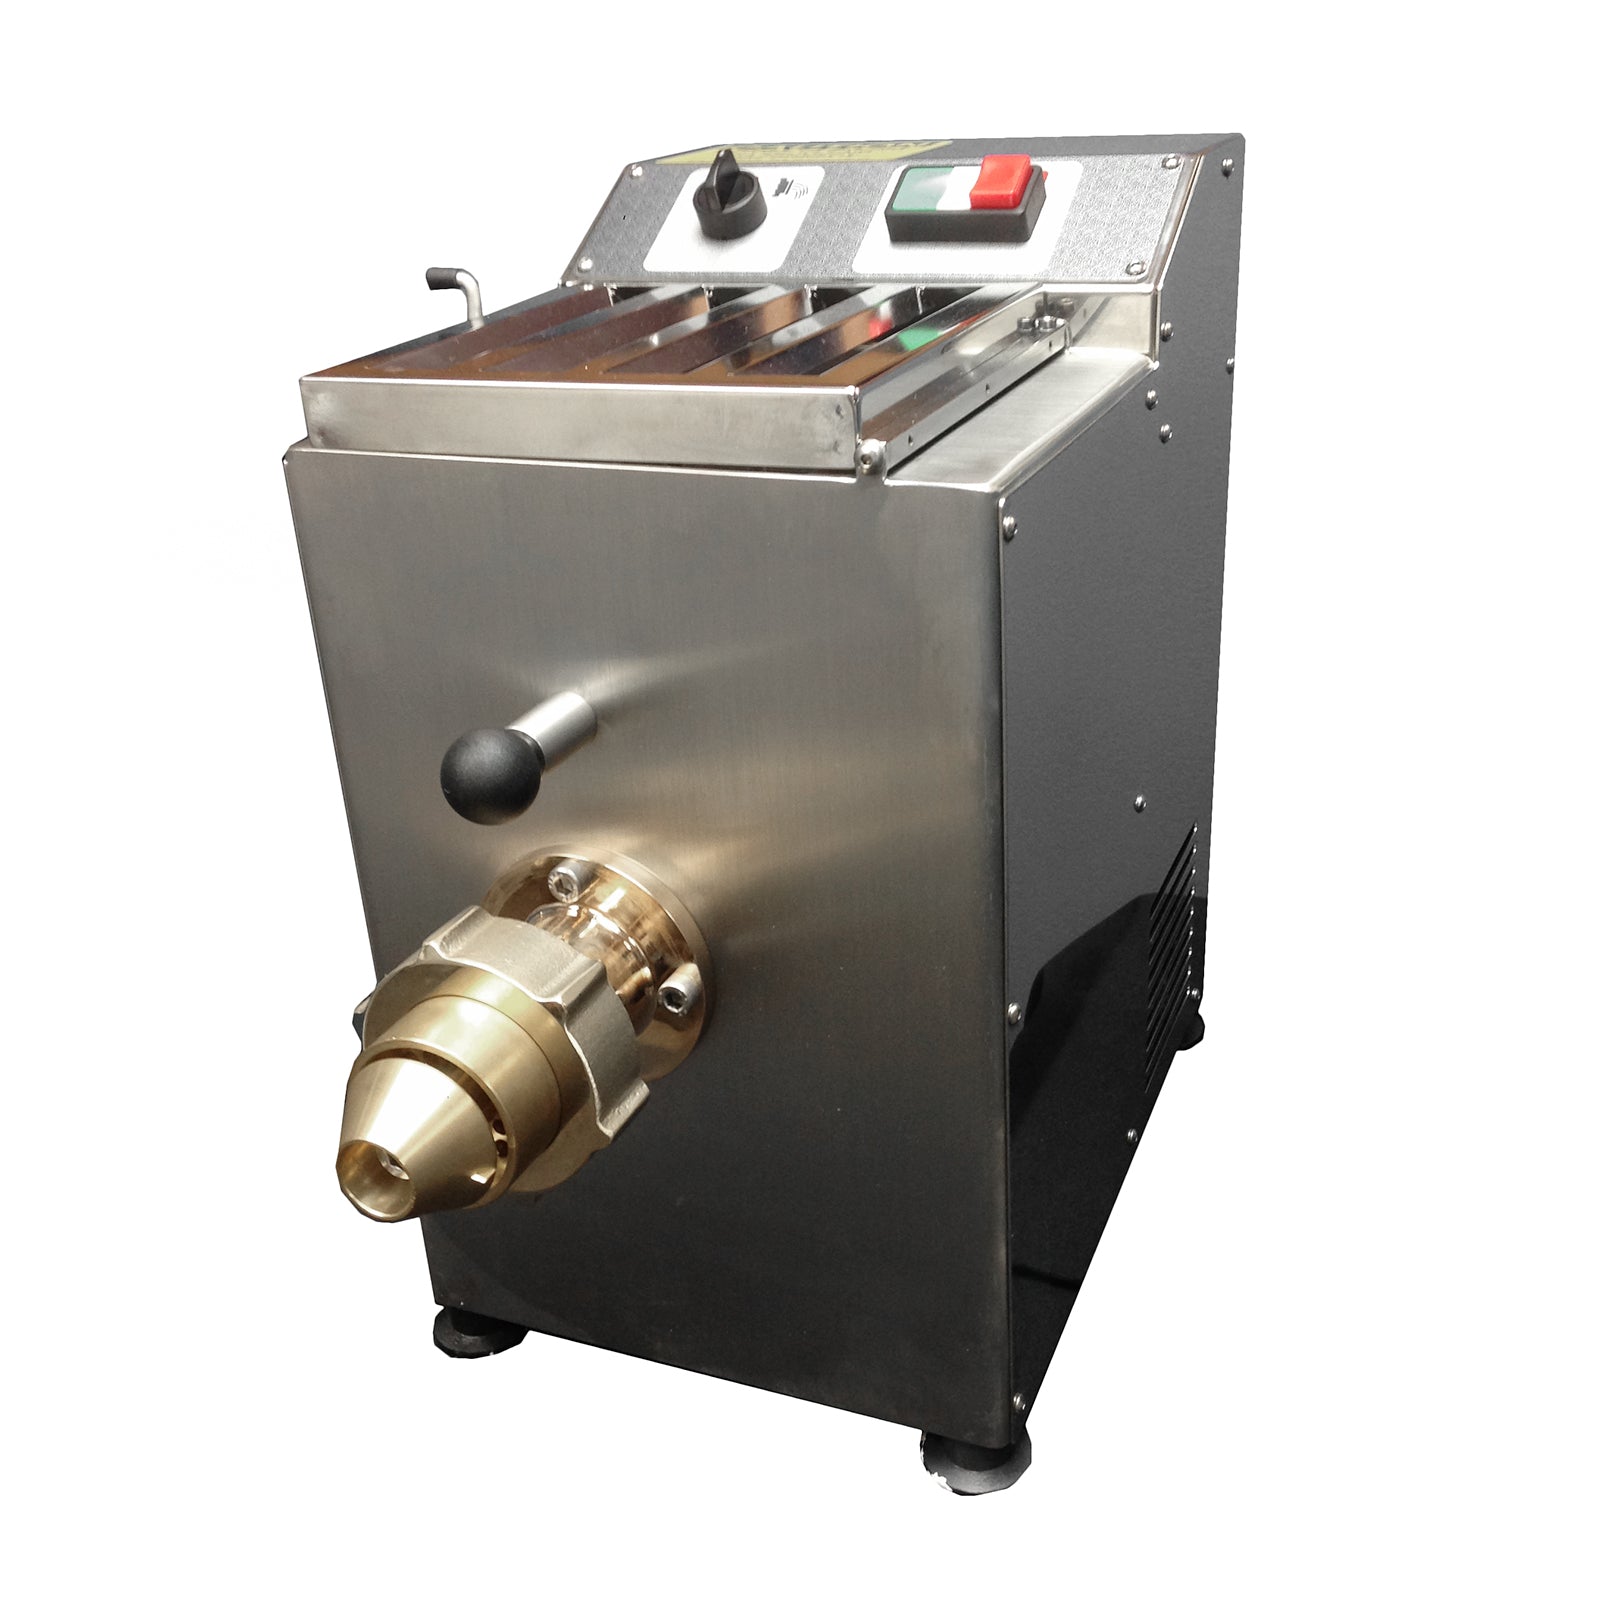 Avancini Pasta Extruder Machine - TR70, 8-10 Lbs Production Per